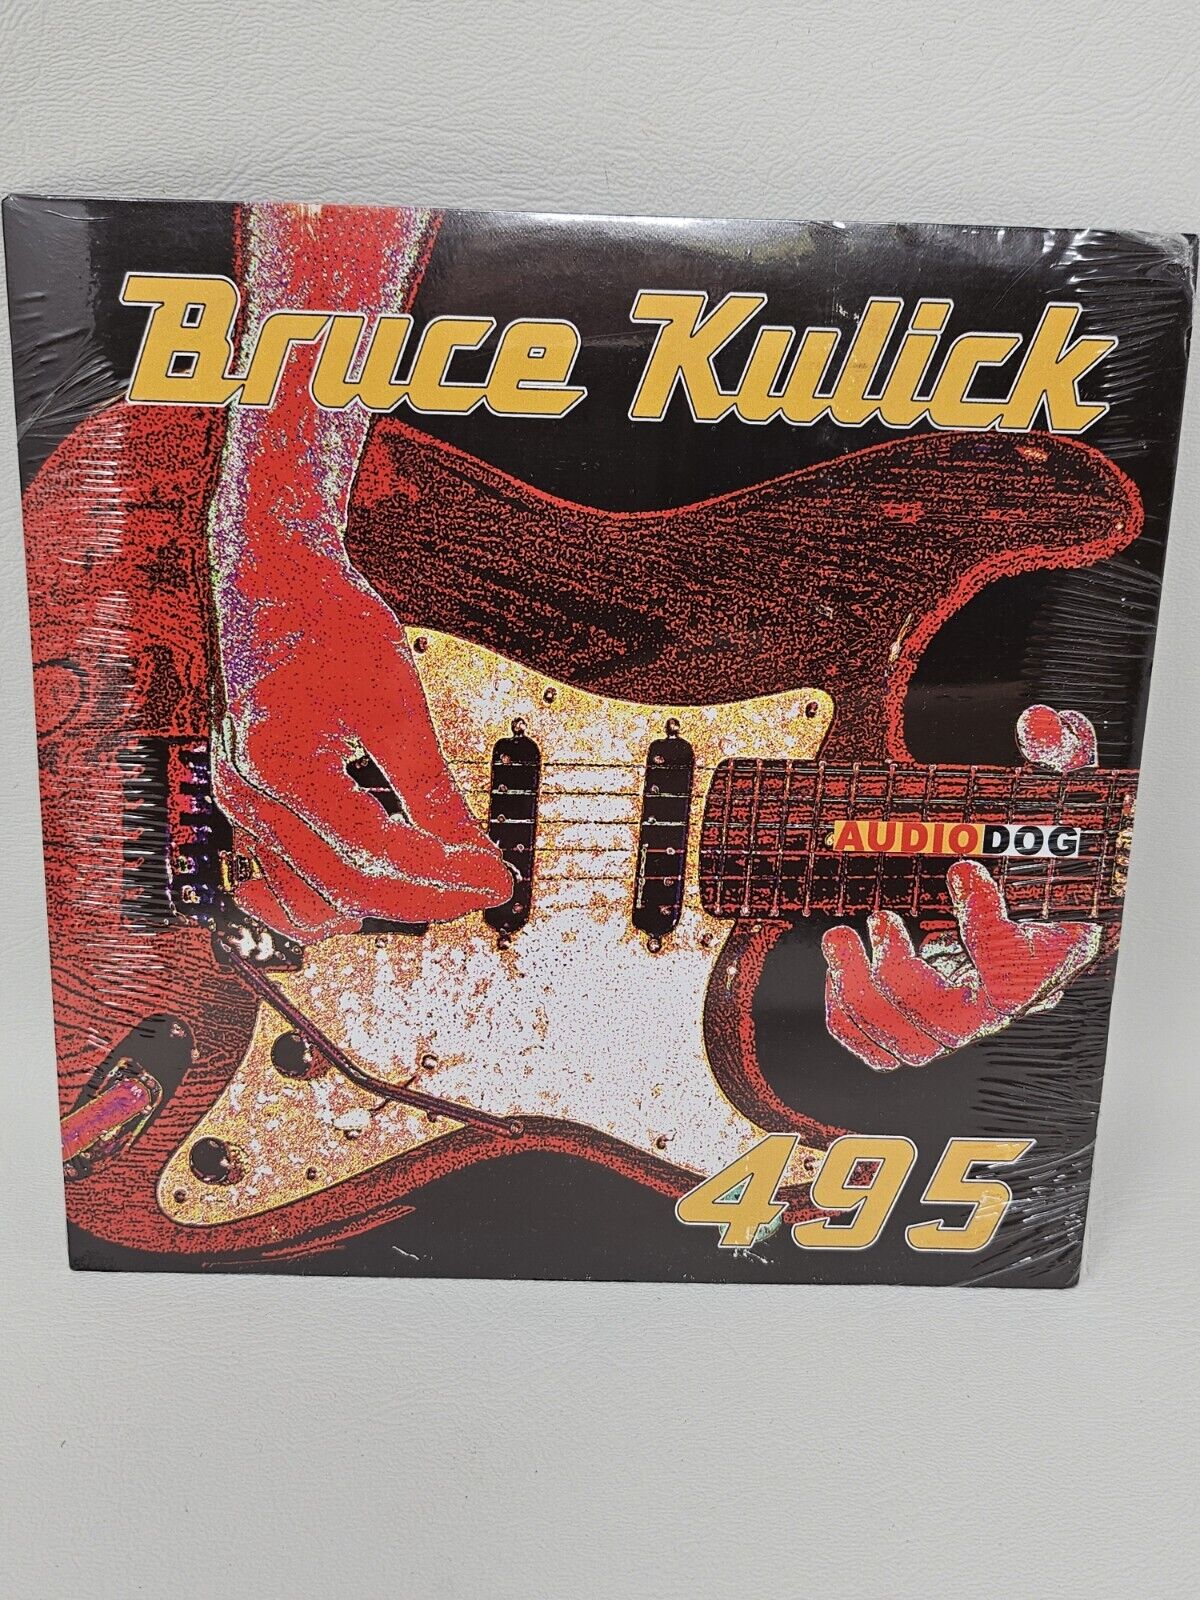 Bruce Kulick 495 M/Liar 7” Single Kiss Audiodog Eric Carr Rockology *NEW/SEALED*